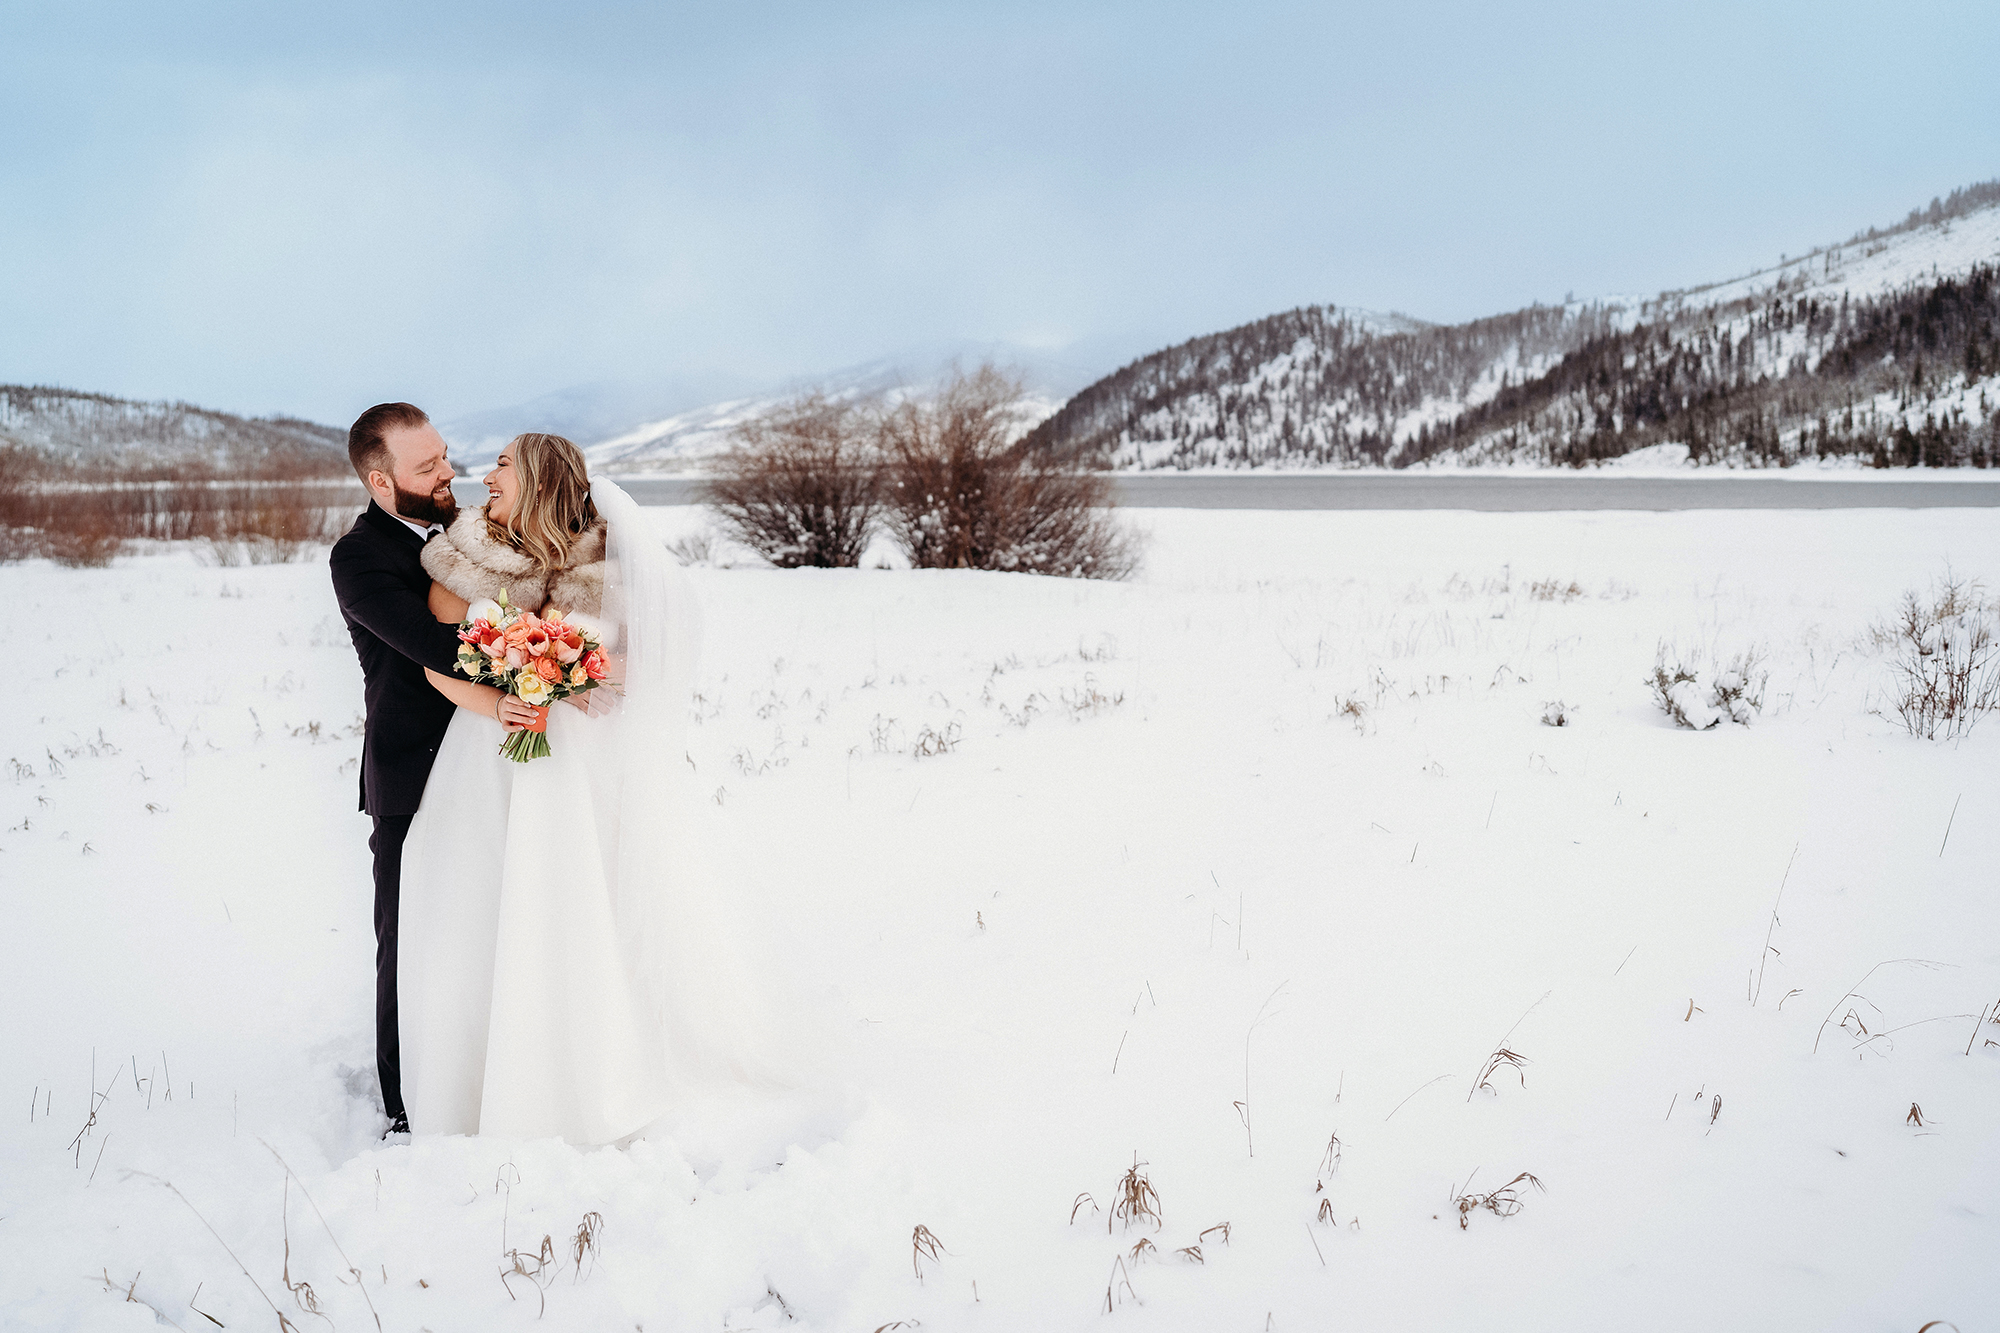 Colorado wedding photographer captures couple embracing